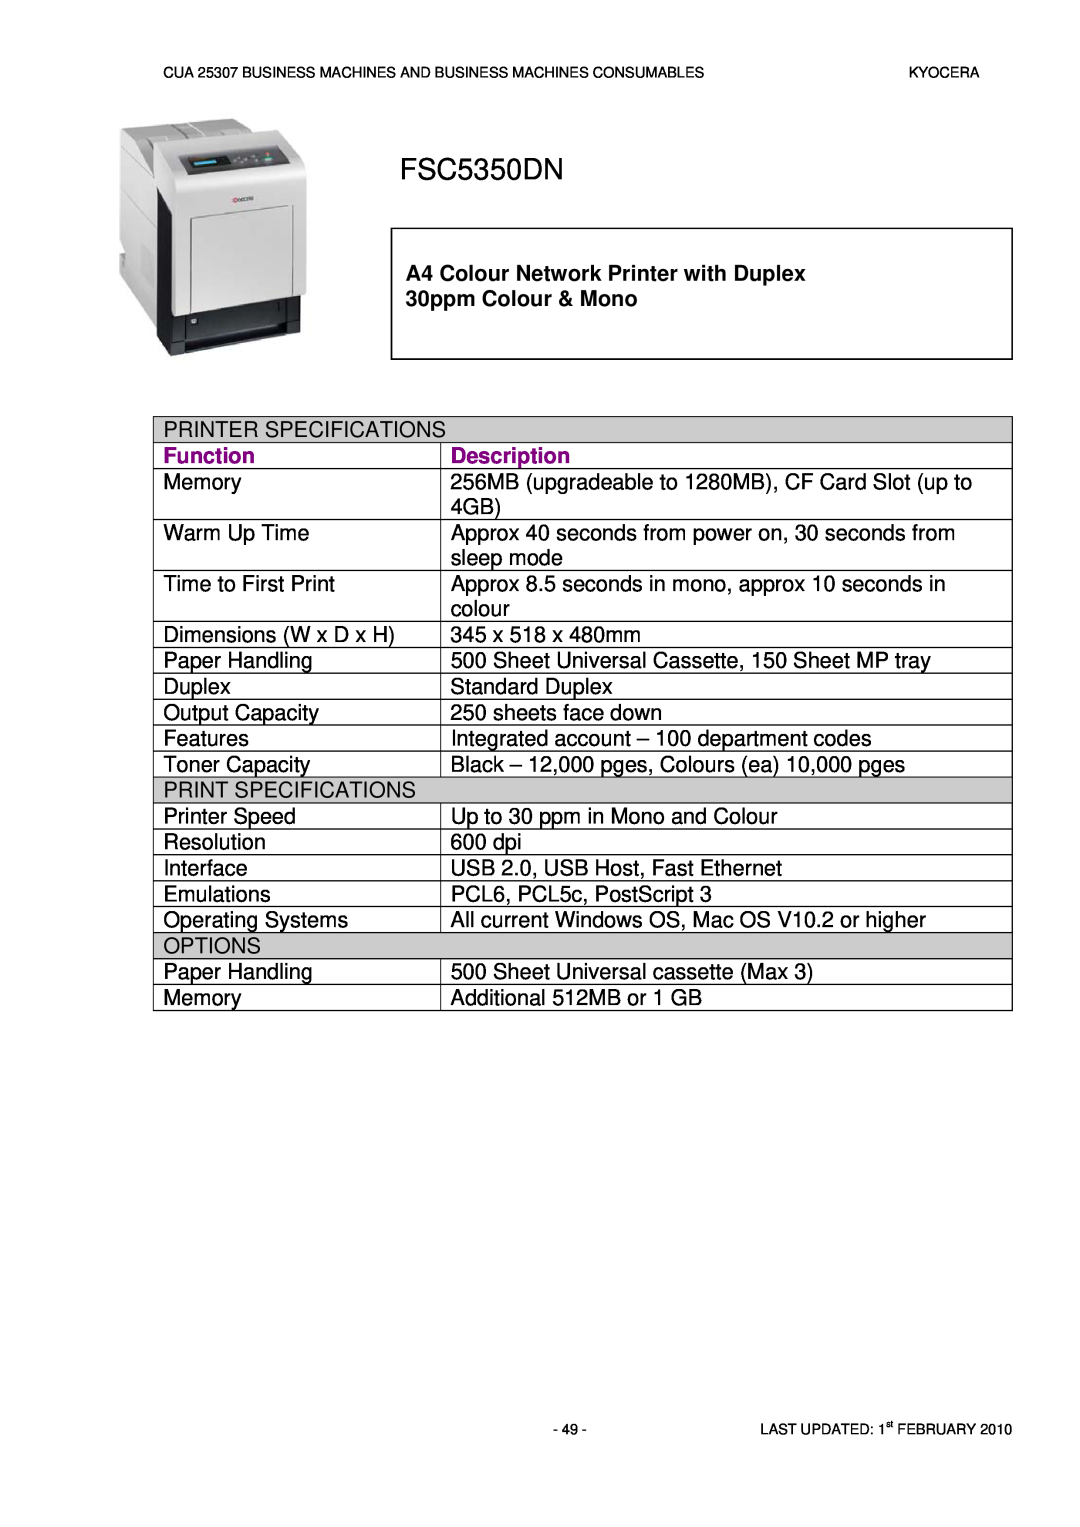 Kyocera CUA 25307 manual FSC5350DN, Function, Description 